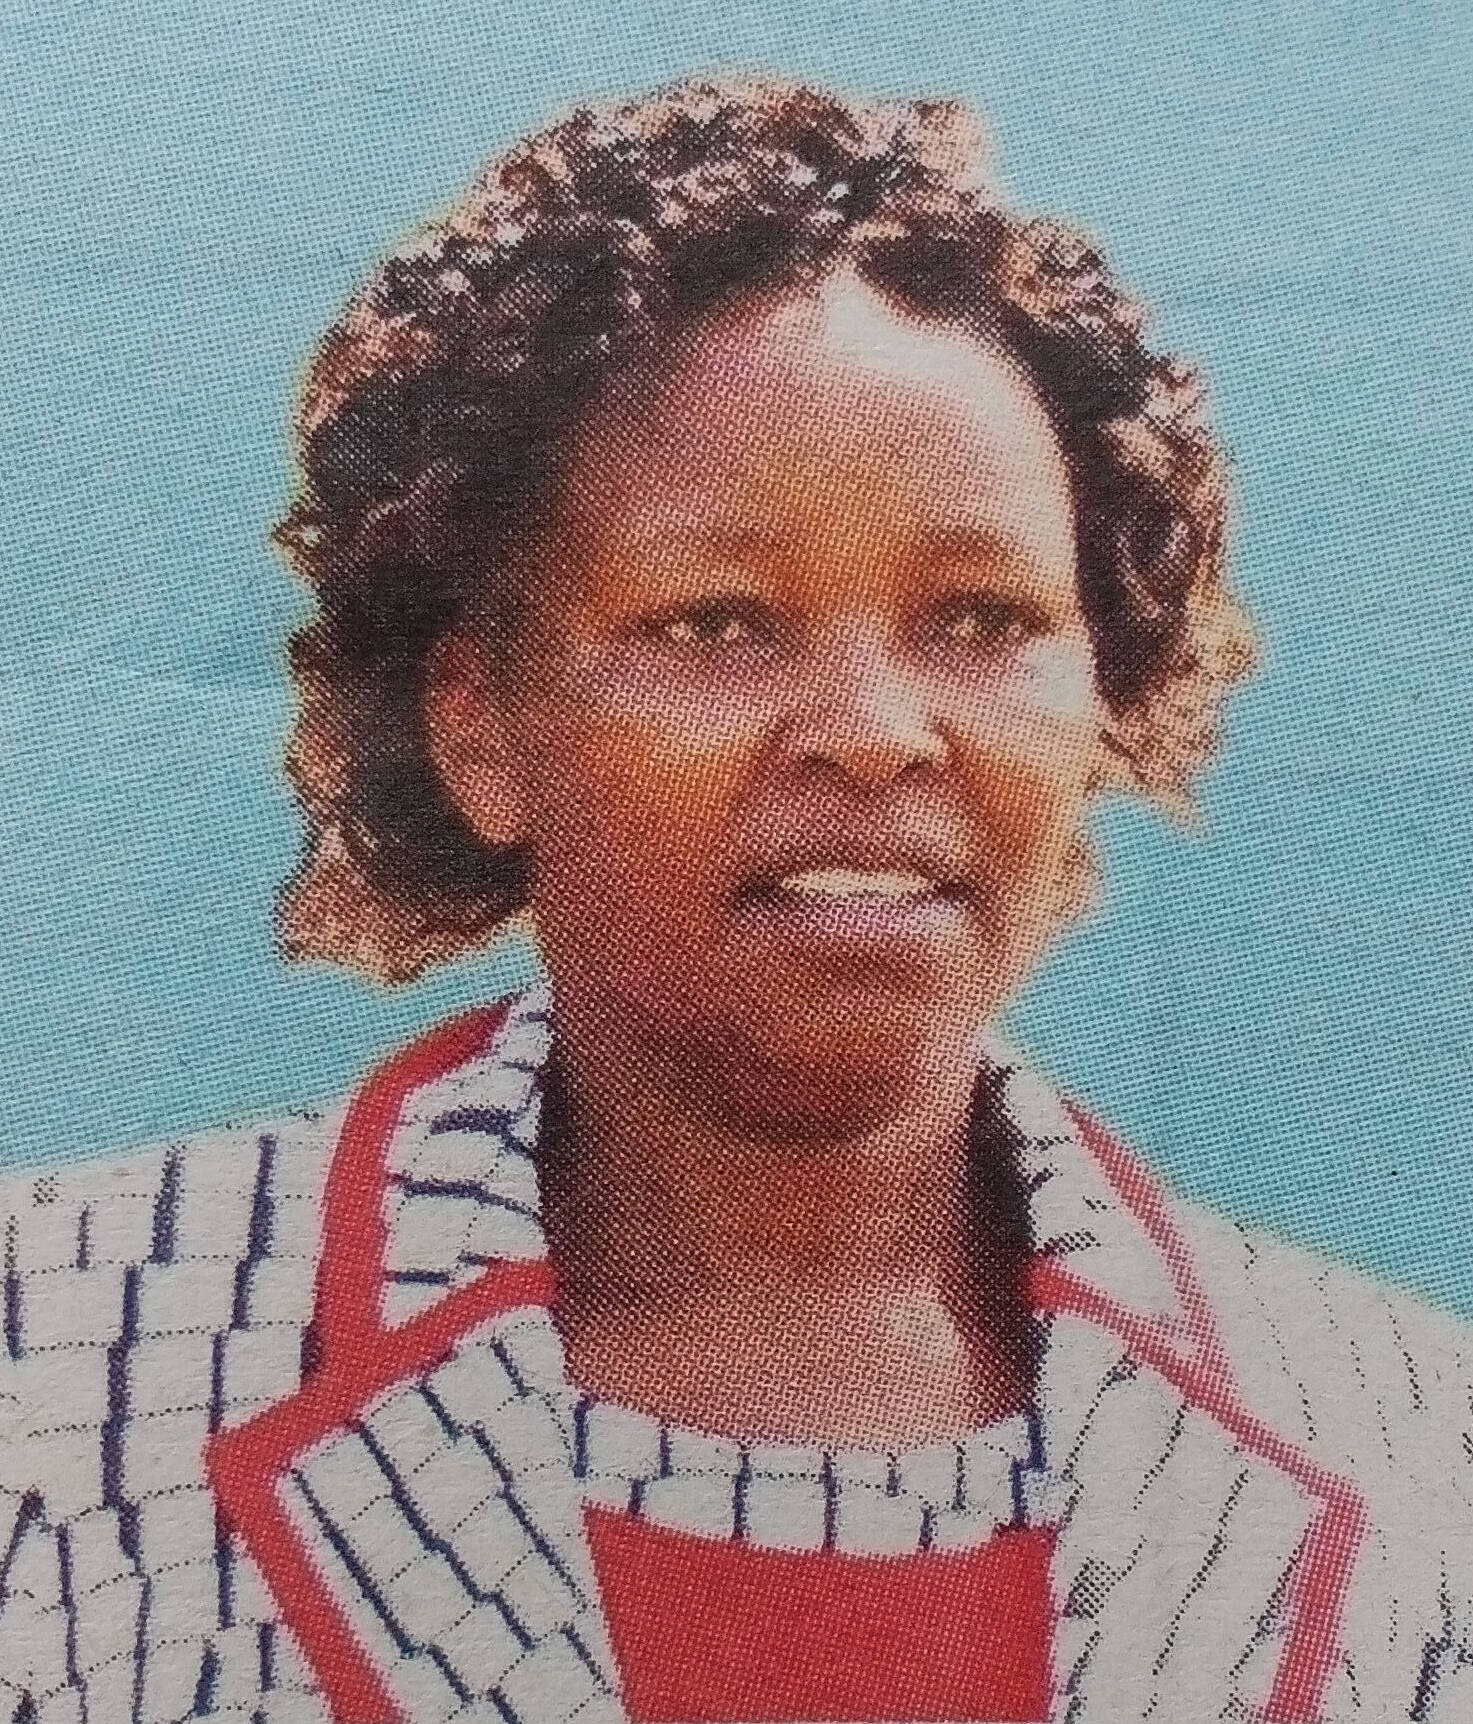 Obituary Image of Monica Nyambura Njuguna (Mrs Gathirimu)